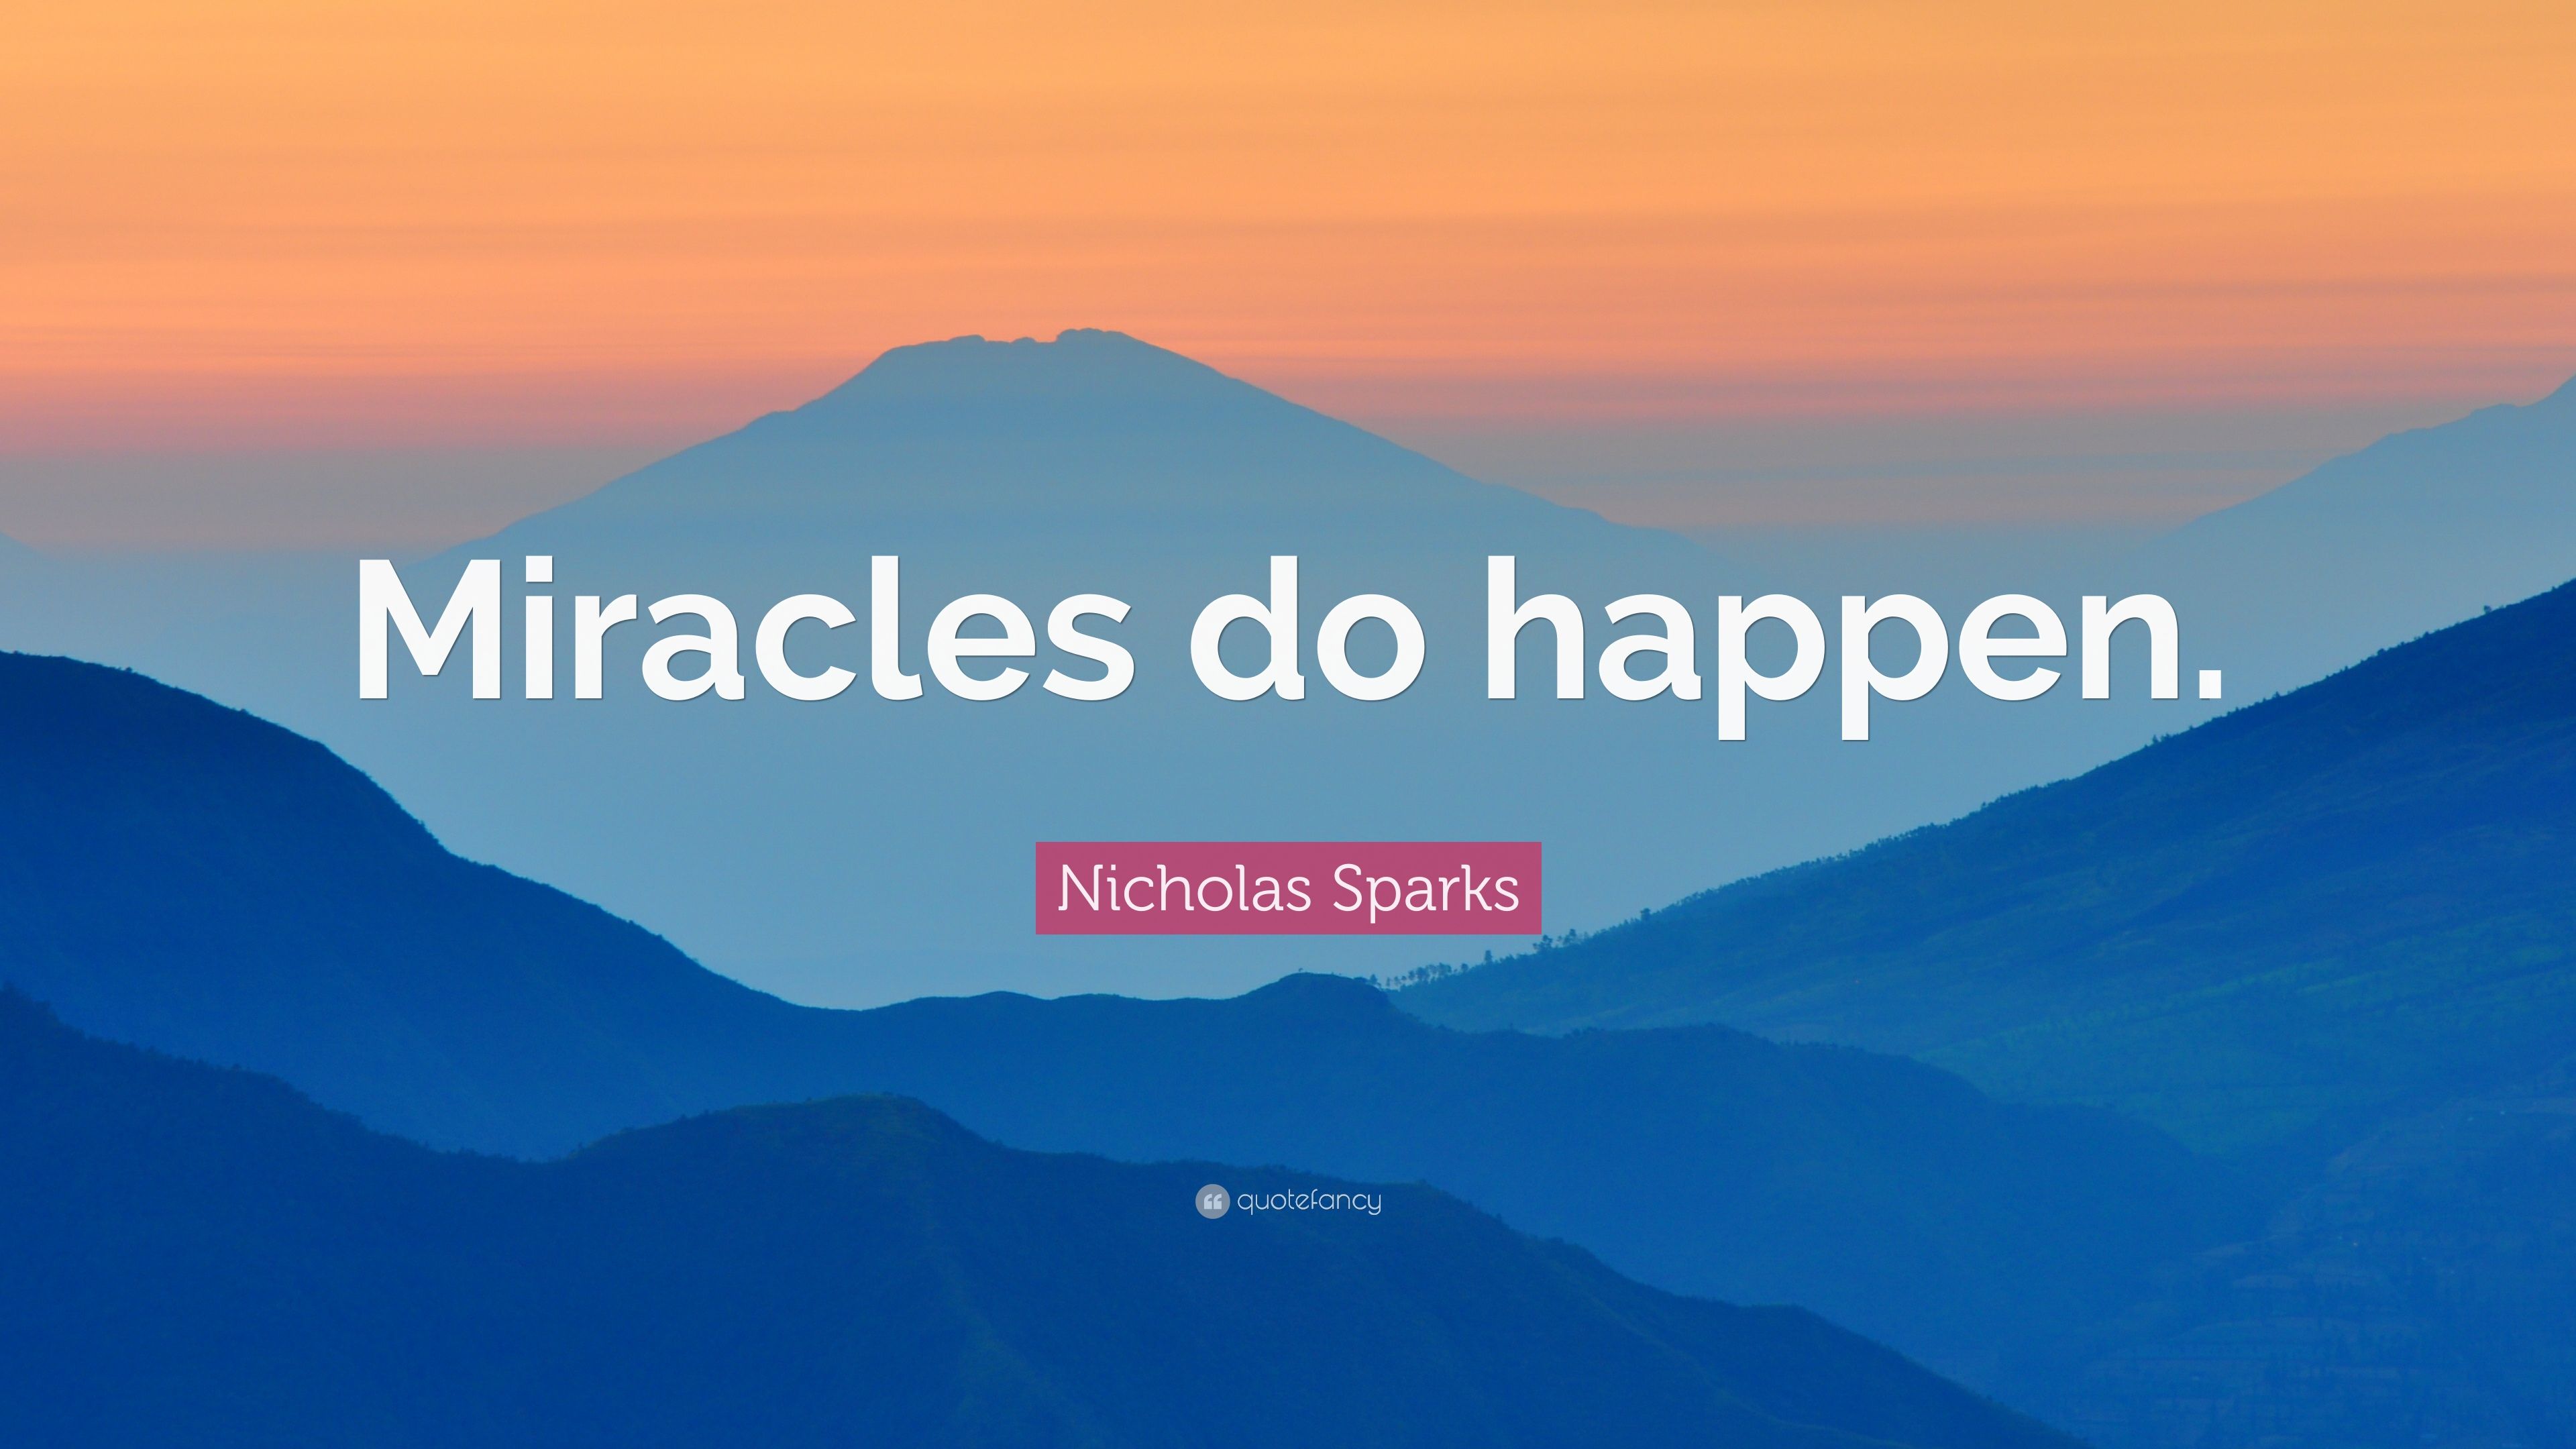 Nicholas Sparks Quote: “Miracles do happen.” (7 wallpaper)